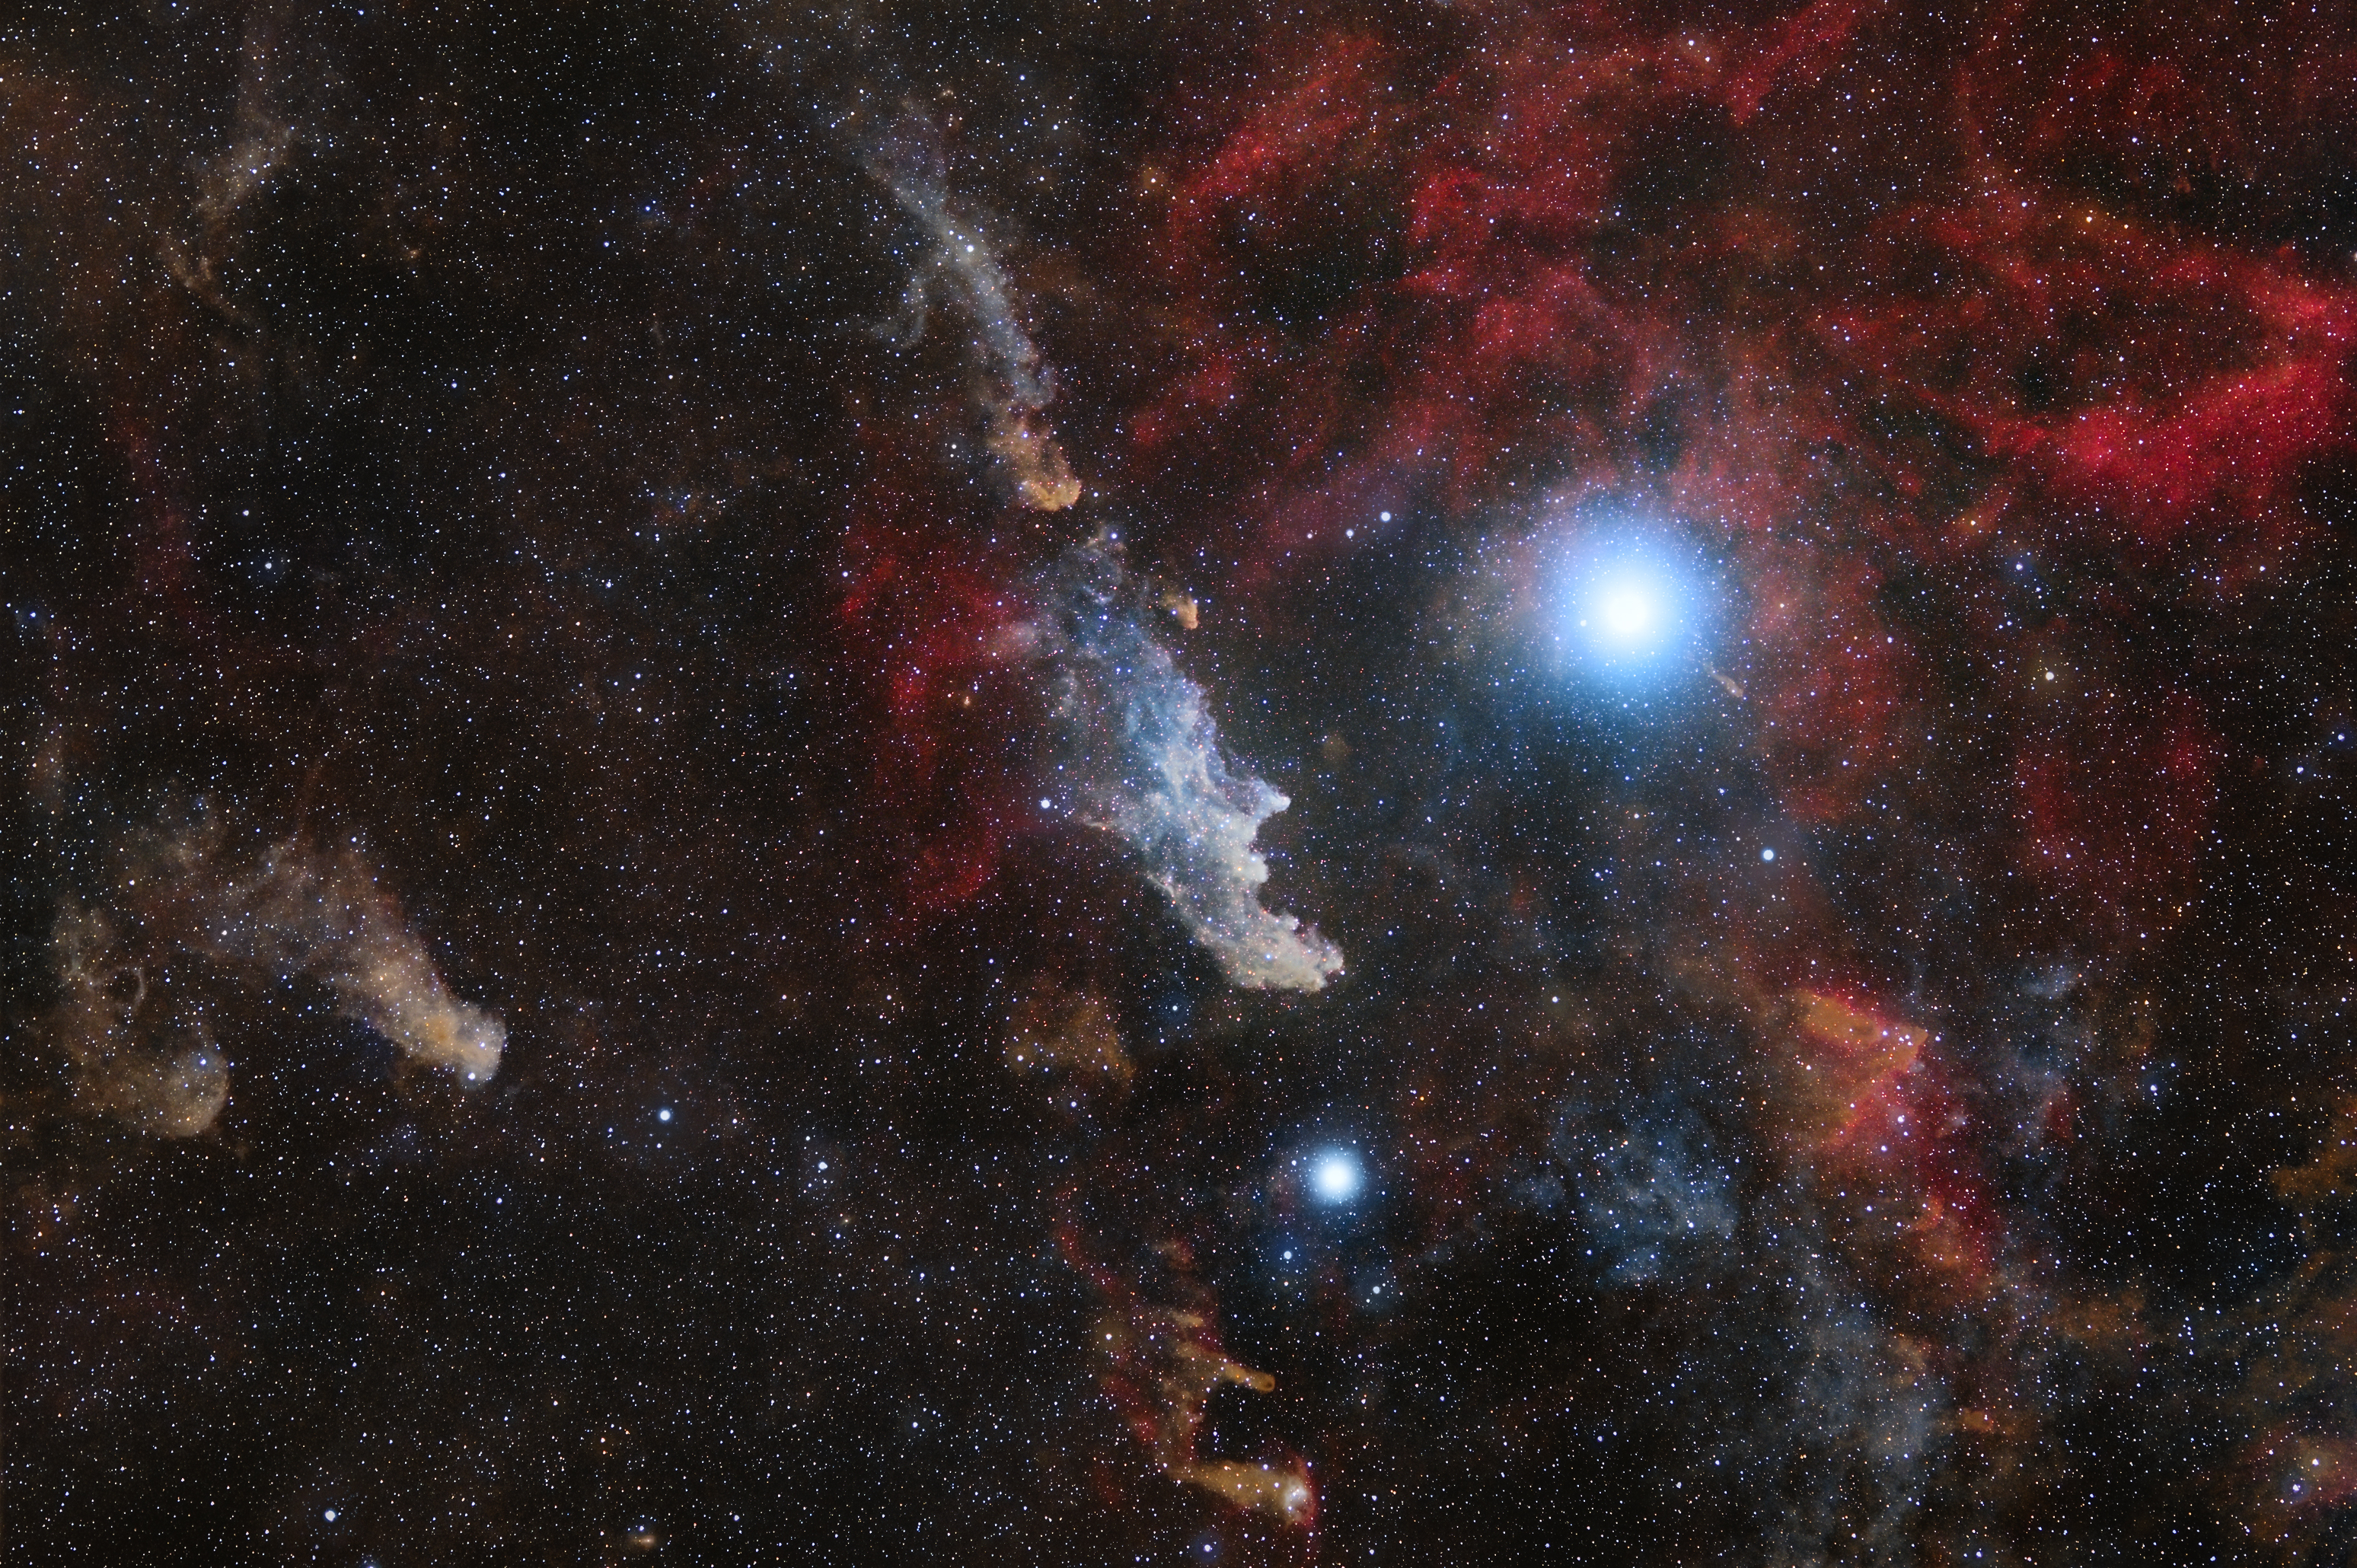 IC2118 The Witches Head Nebula.jpg